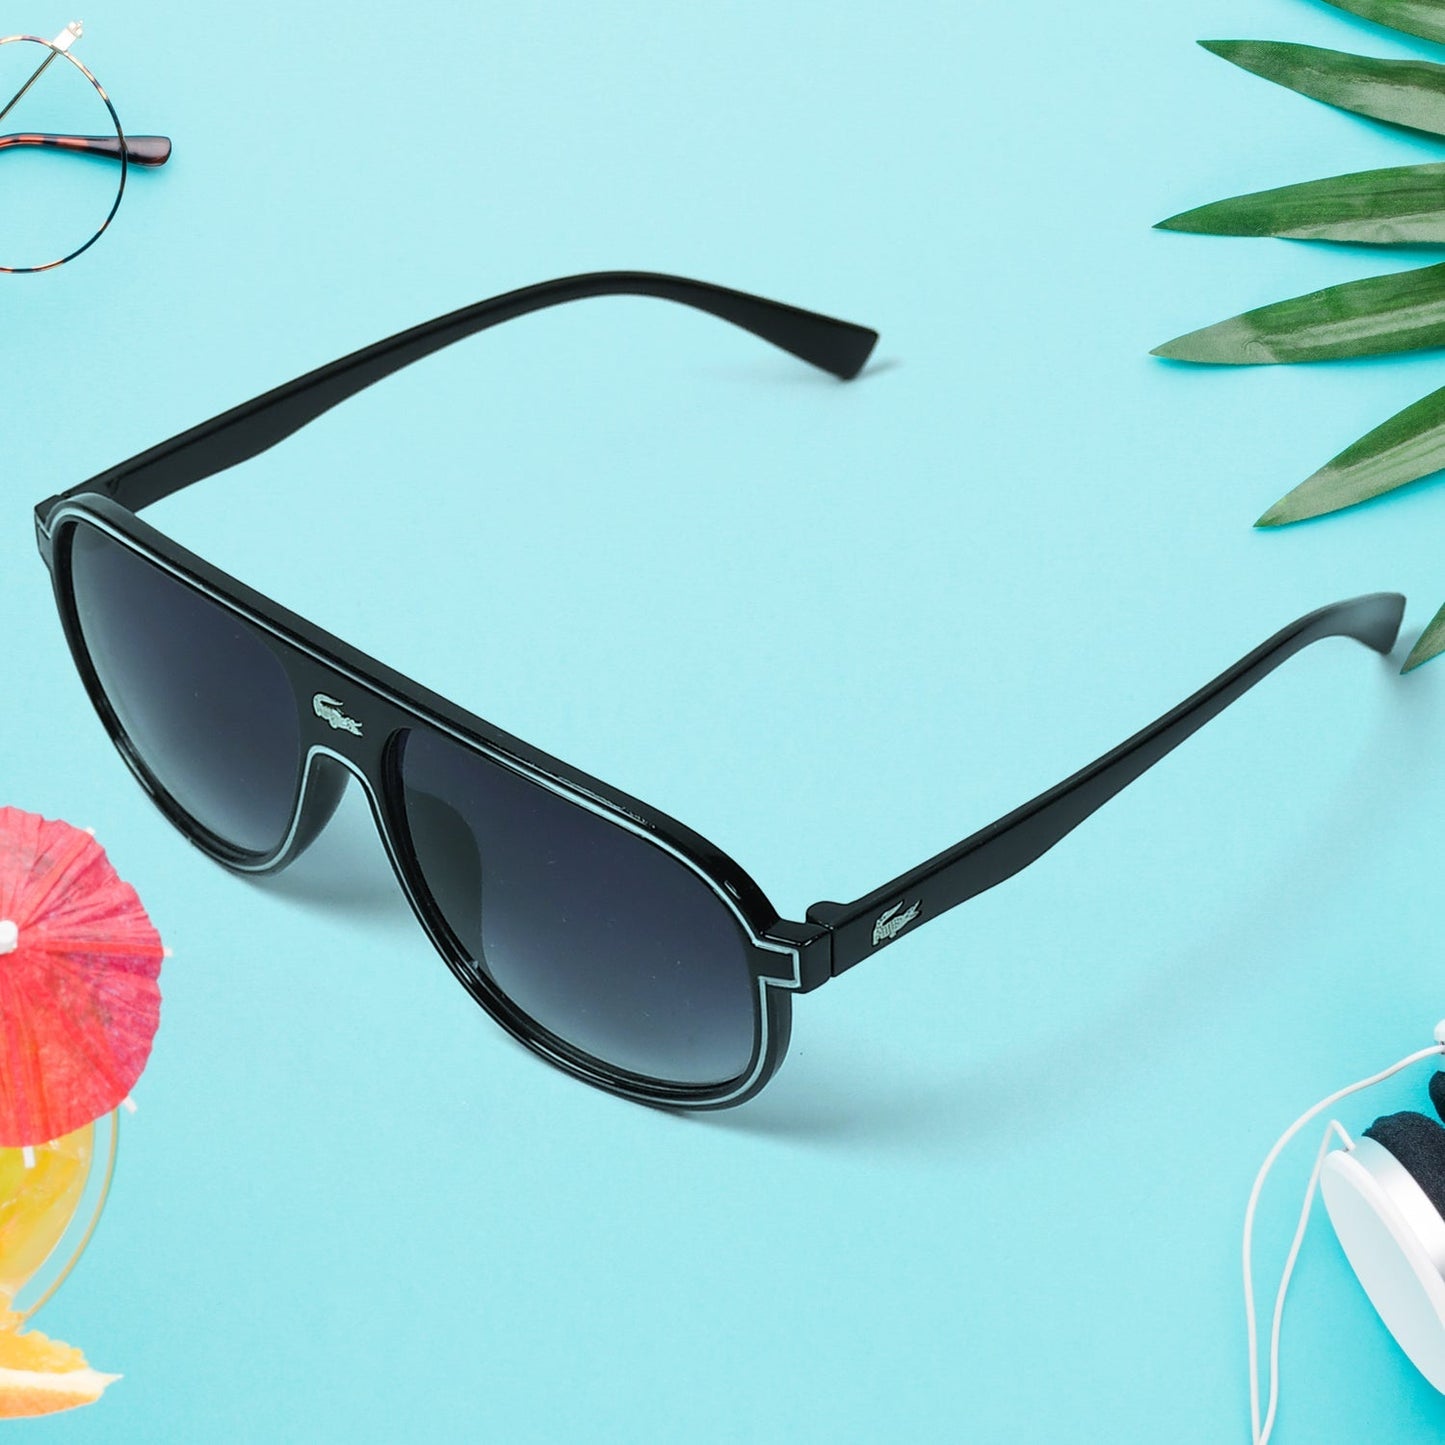 Fashion Sunglasses Full Rim Wayfarer Branded Latest and Stylish Sunglasses | Polarized and 100% UV Protected | Men Sunglasses